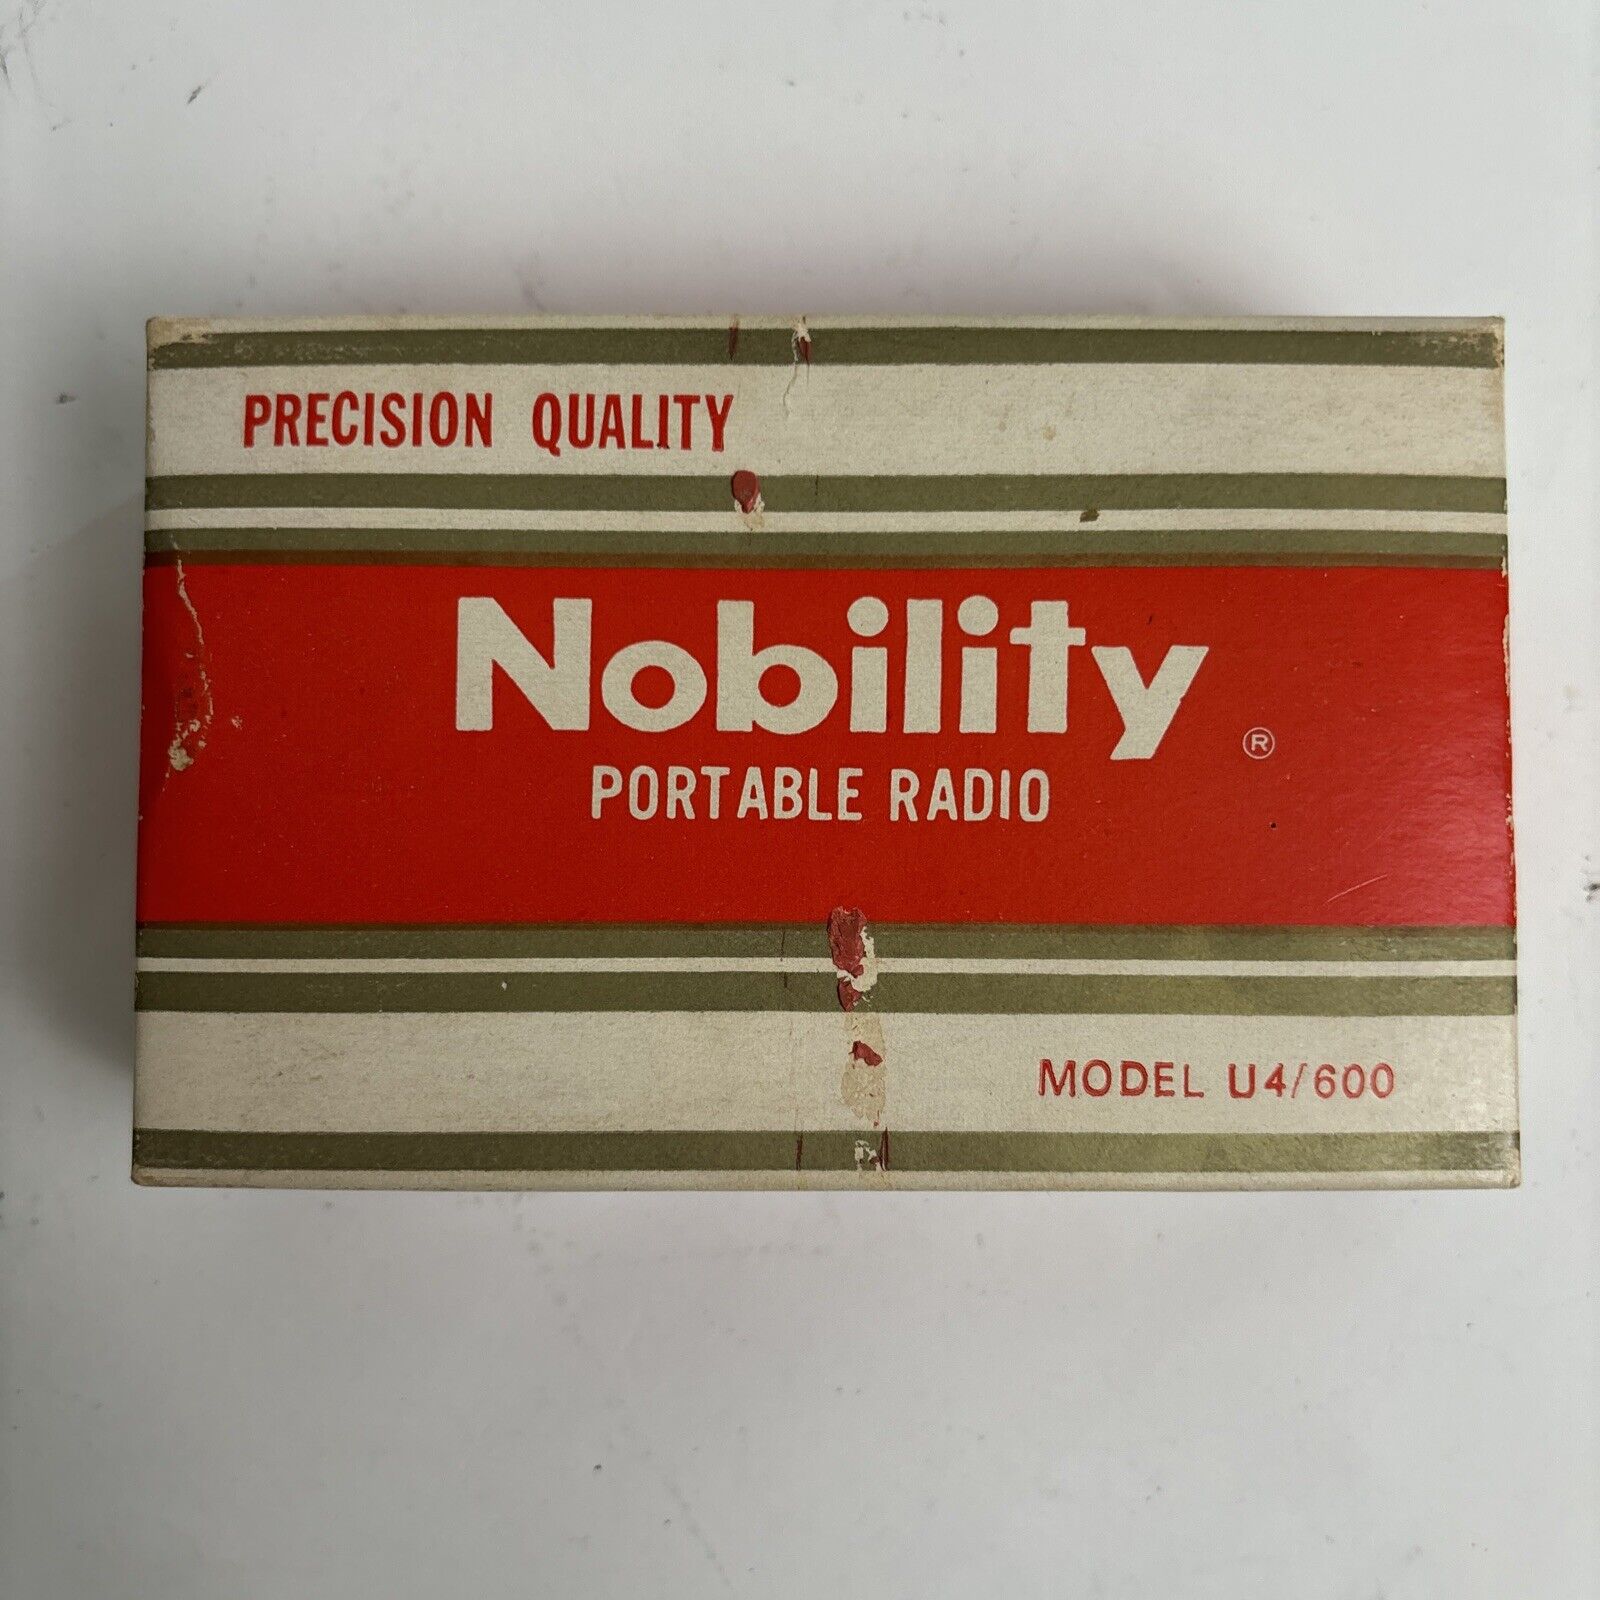 Vintage Precision Nobility Portable Radio. Model U4/600. Made In Hong Kong.